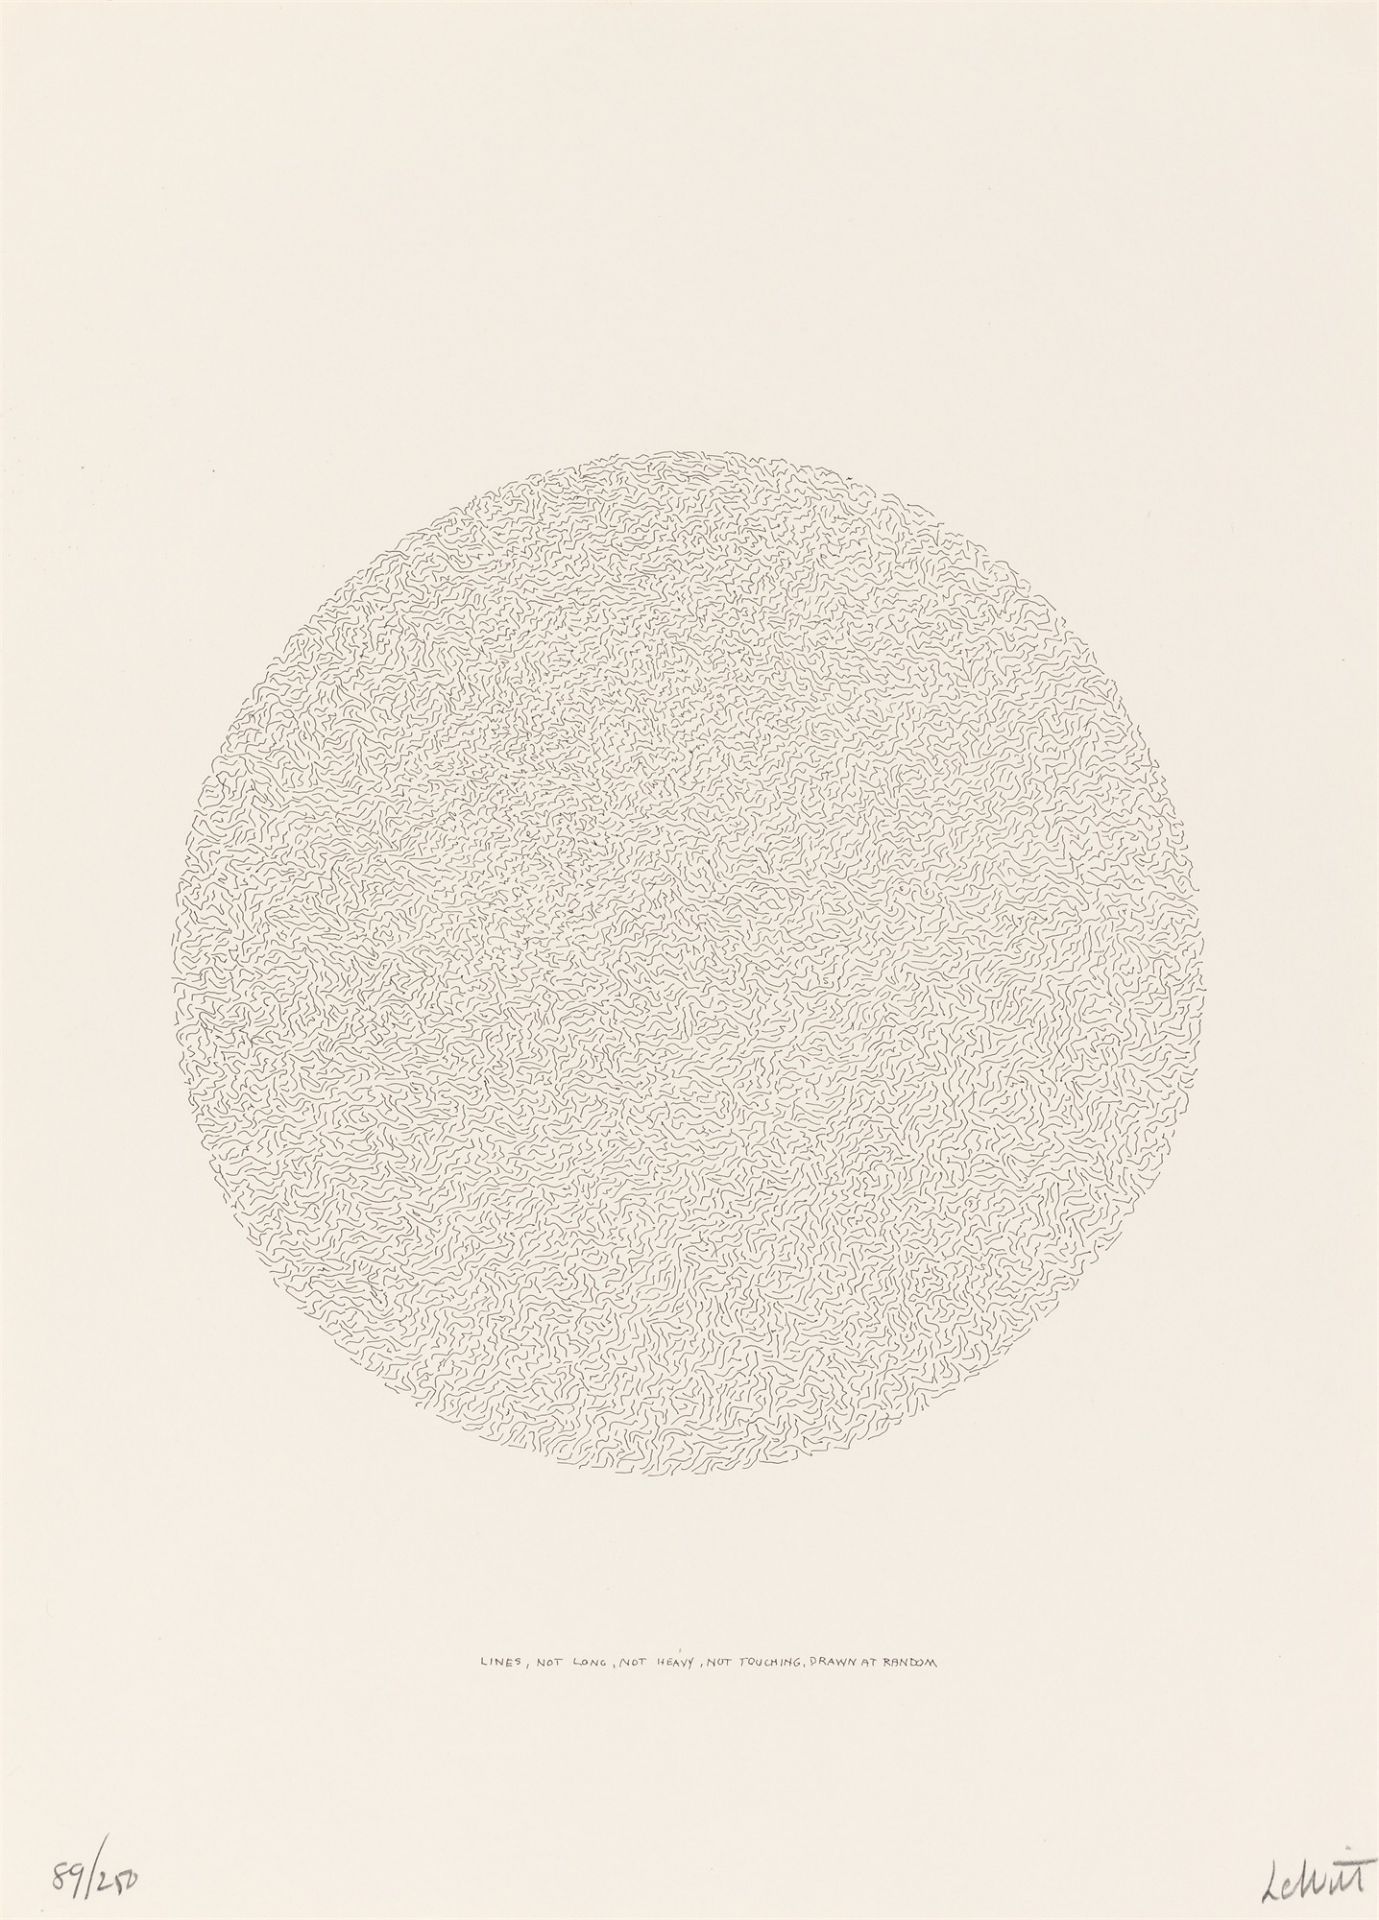 Sol LeWitt. „Lines, Not Long, Not Heavy, Not Touching, Drawn at Random (circle)“. 1970